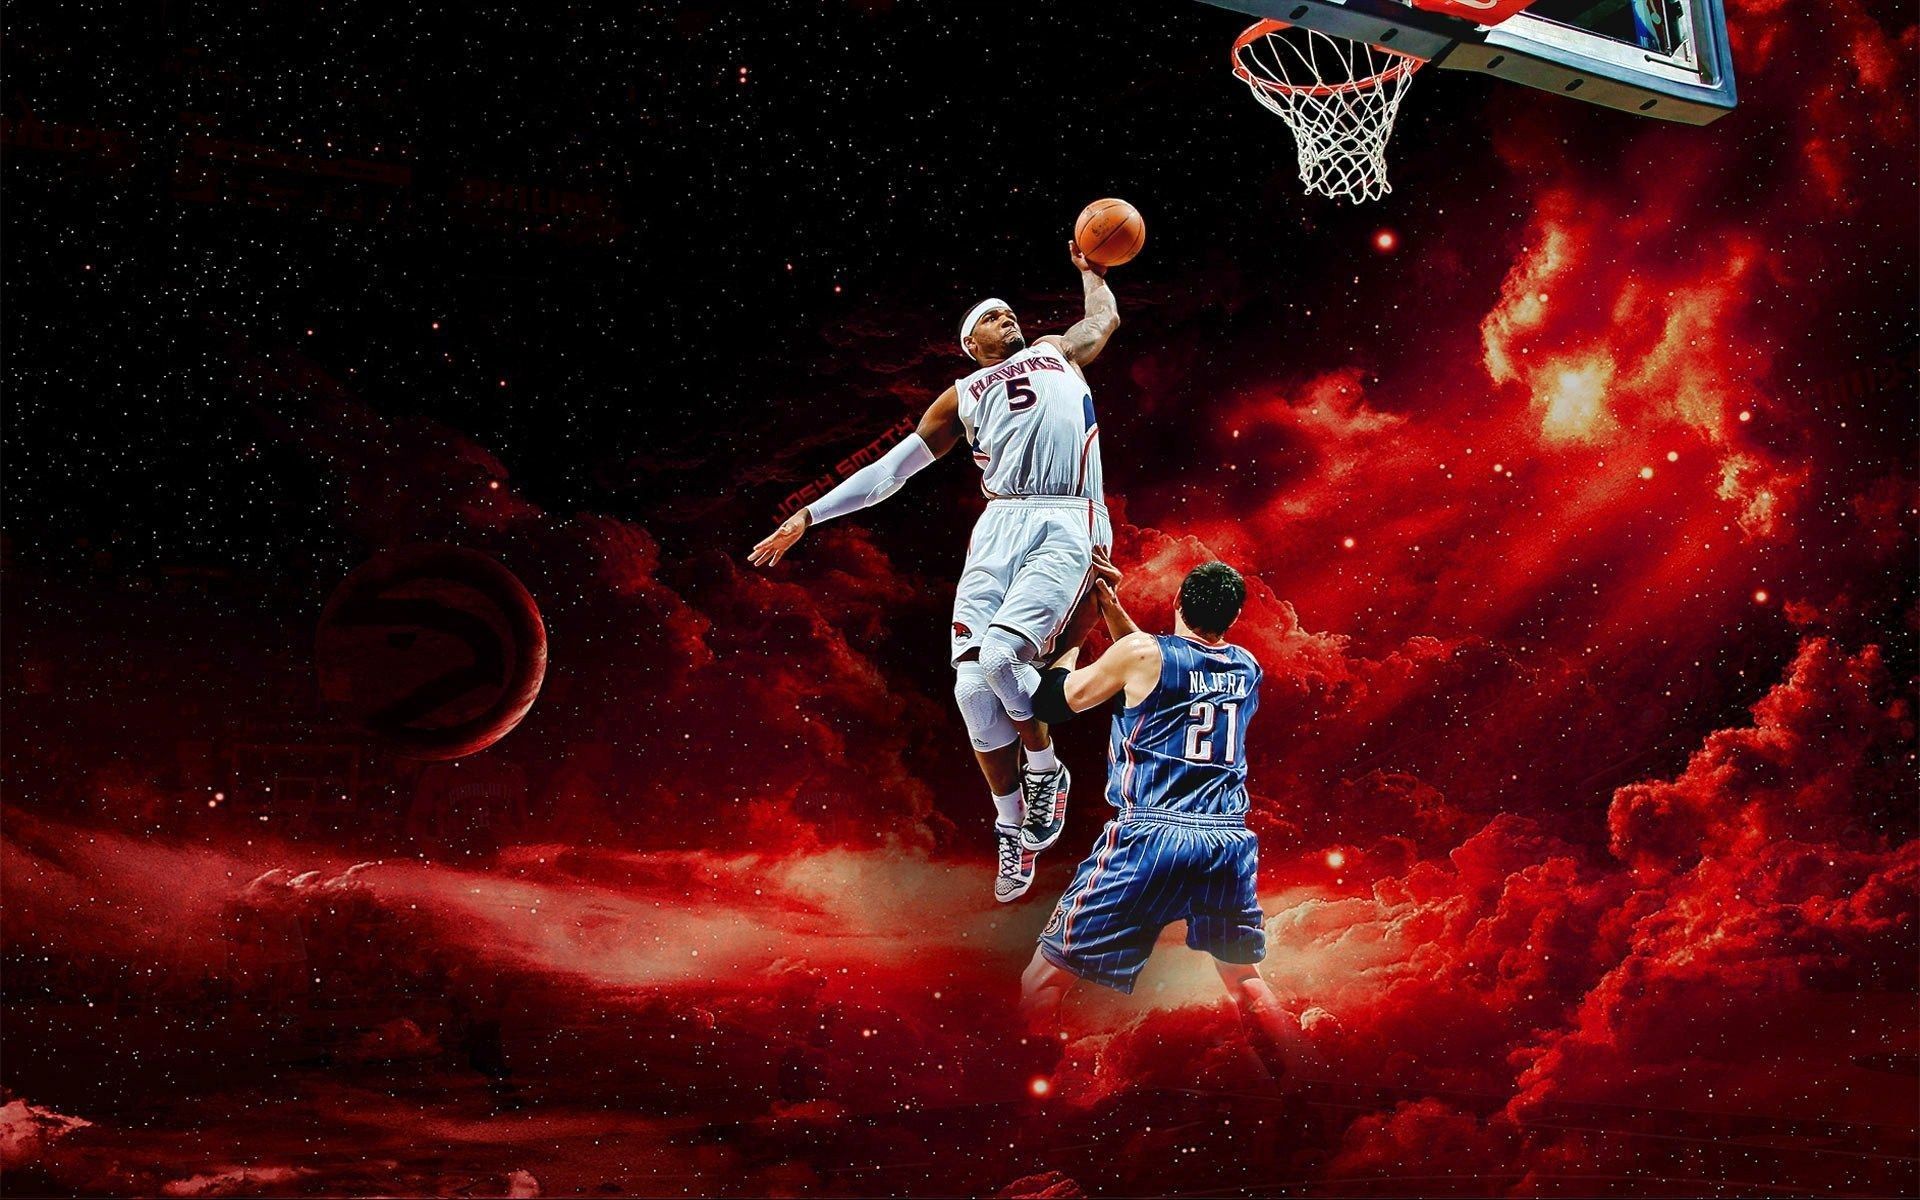 Basketball Hoop Background Wallpaper Image For Free Download  Pngtree